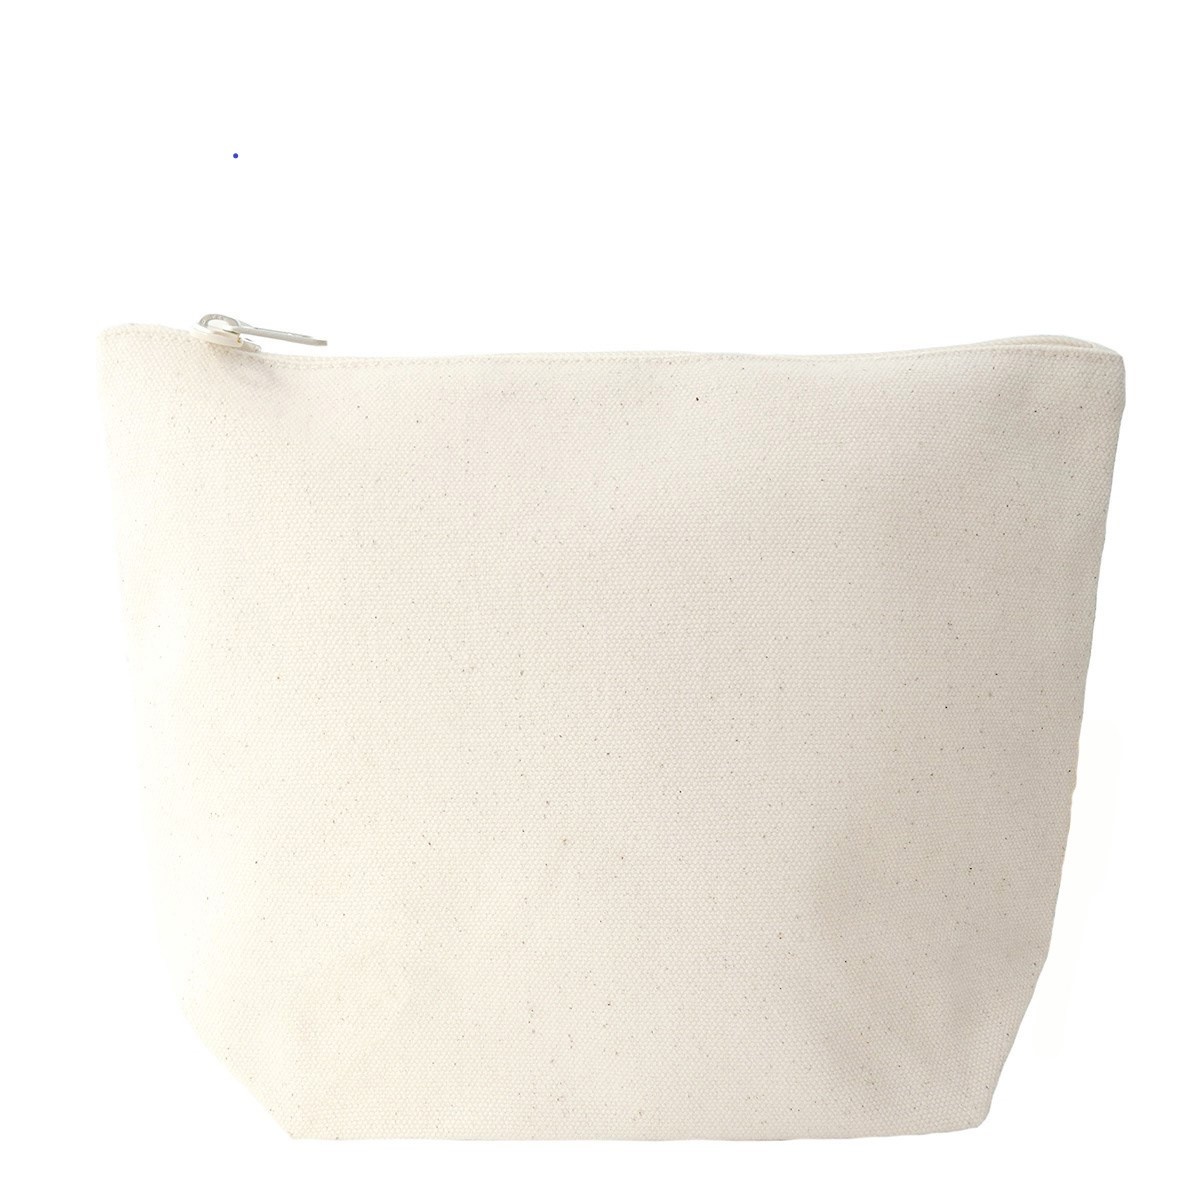 Toilettas - M (24x18x9cm ) - natural white  - zonder label